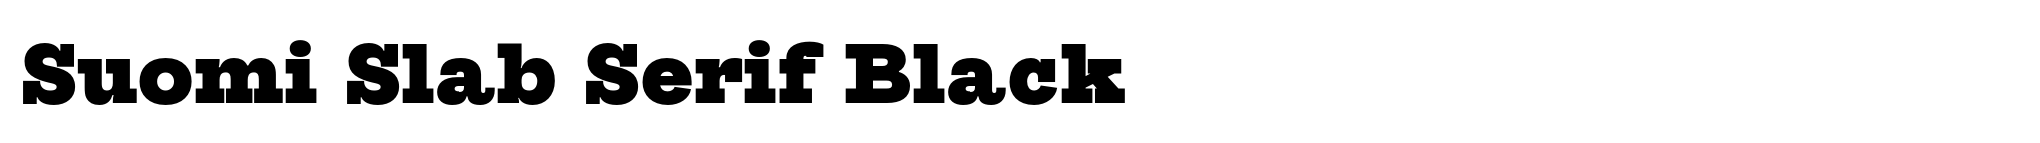 Suomi Slab Serif Black image